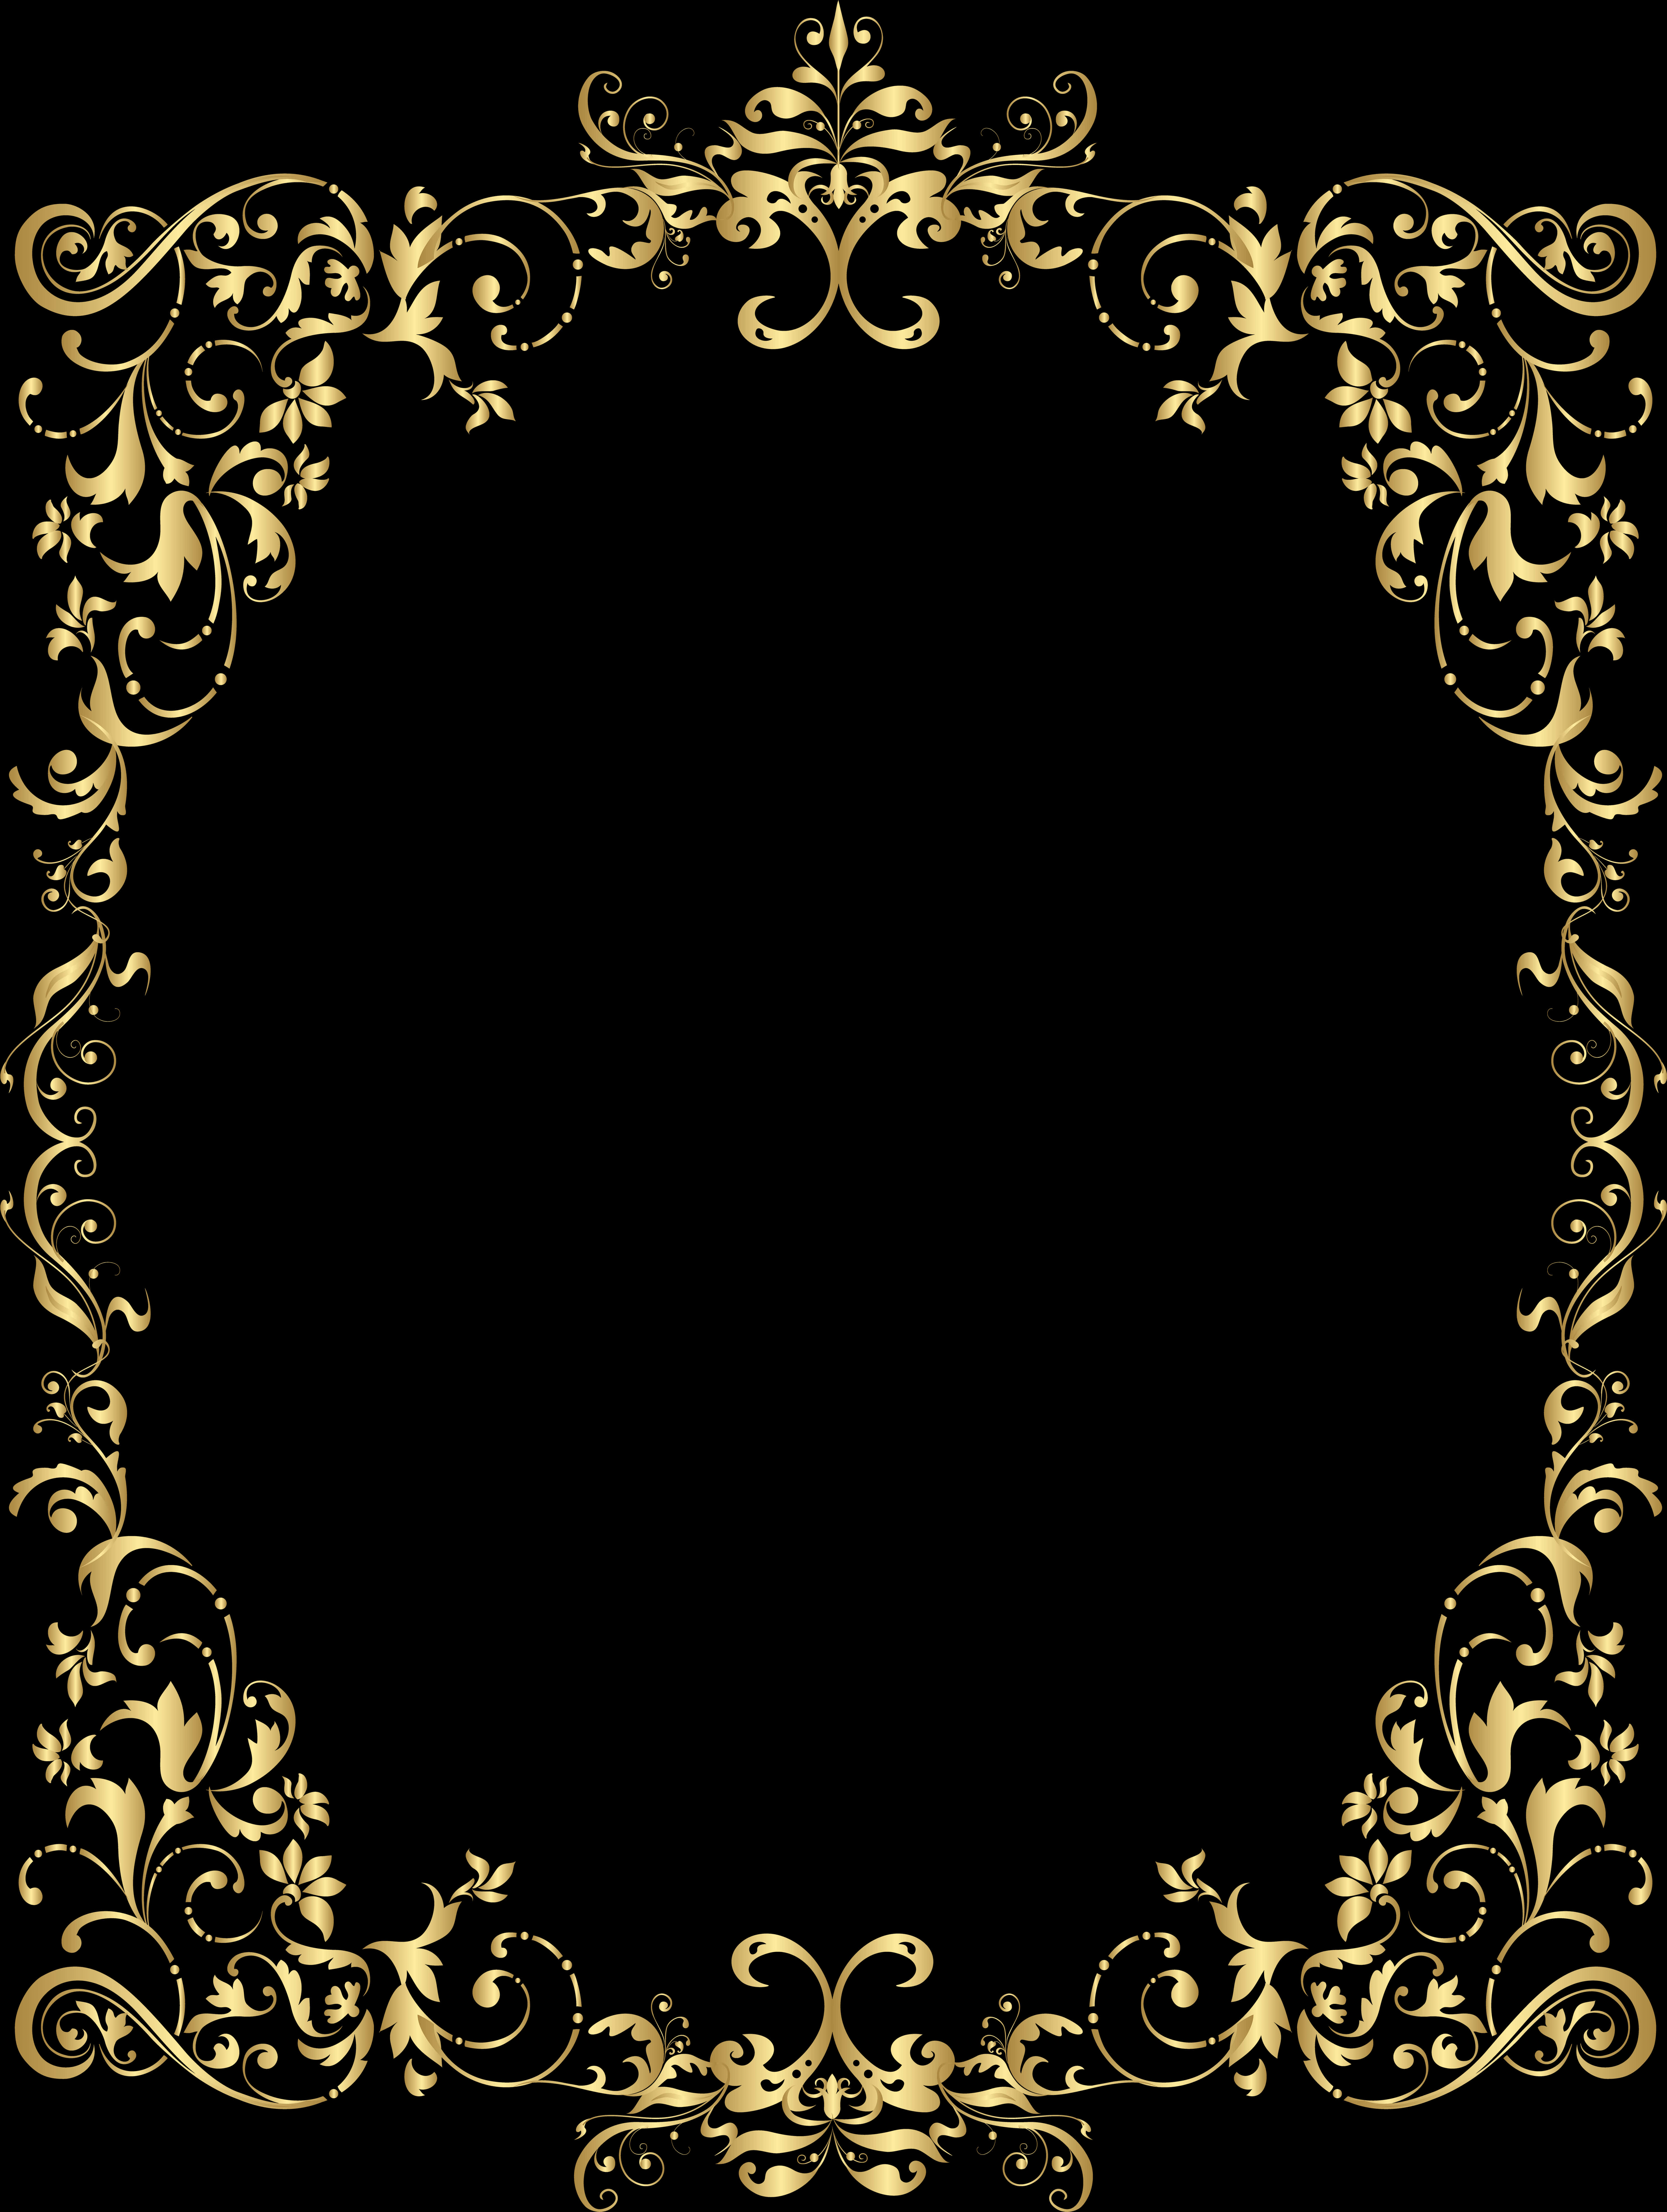 A Gold Floral Frame On A Black Background